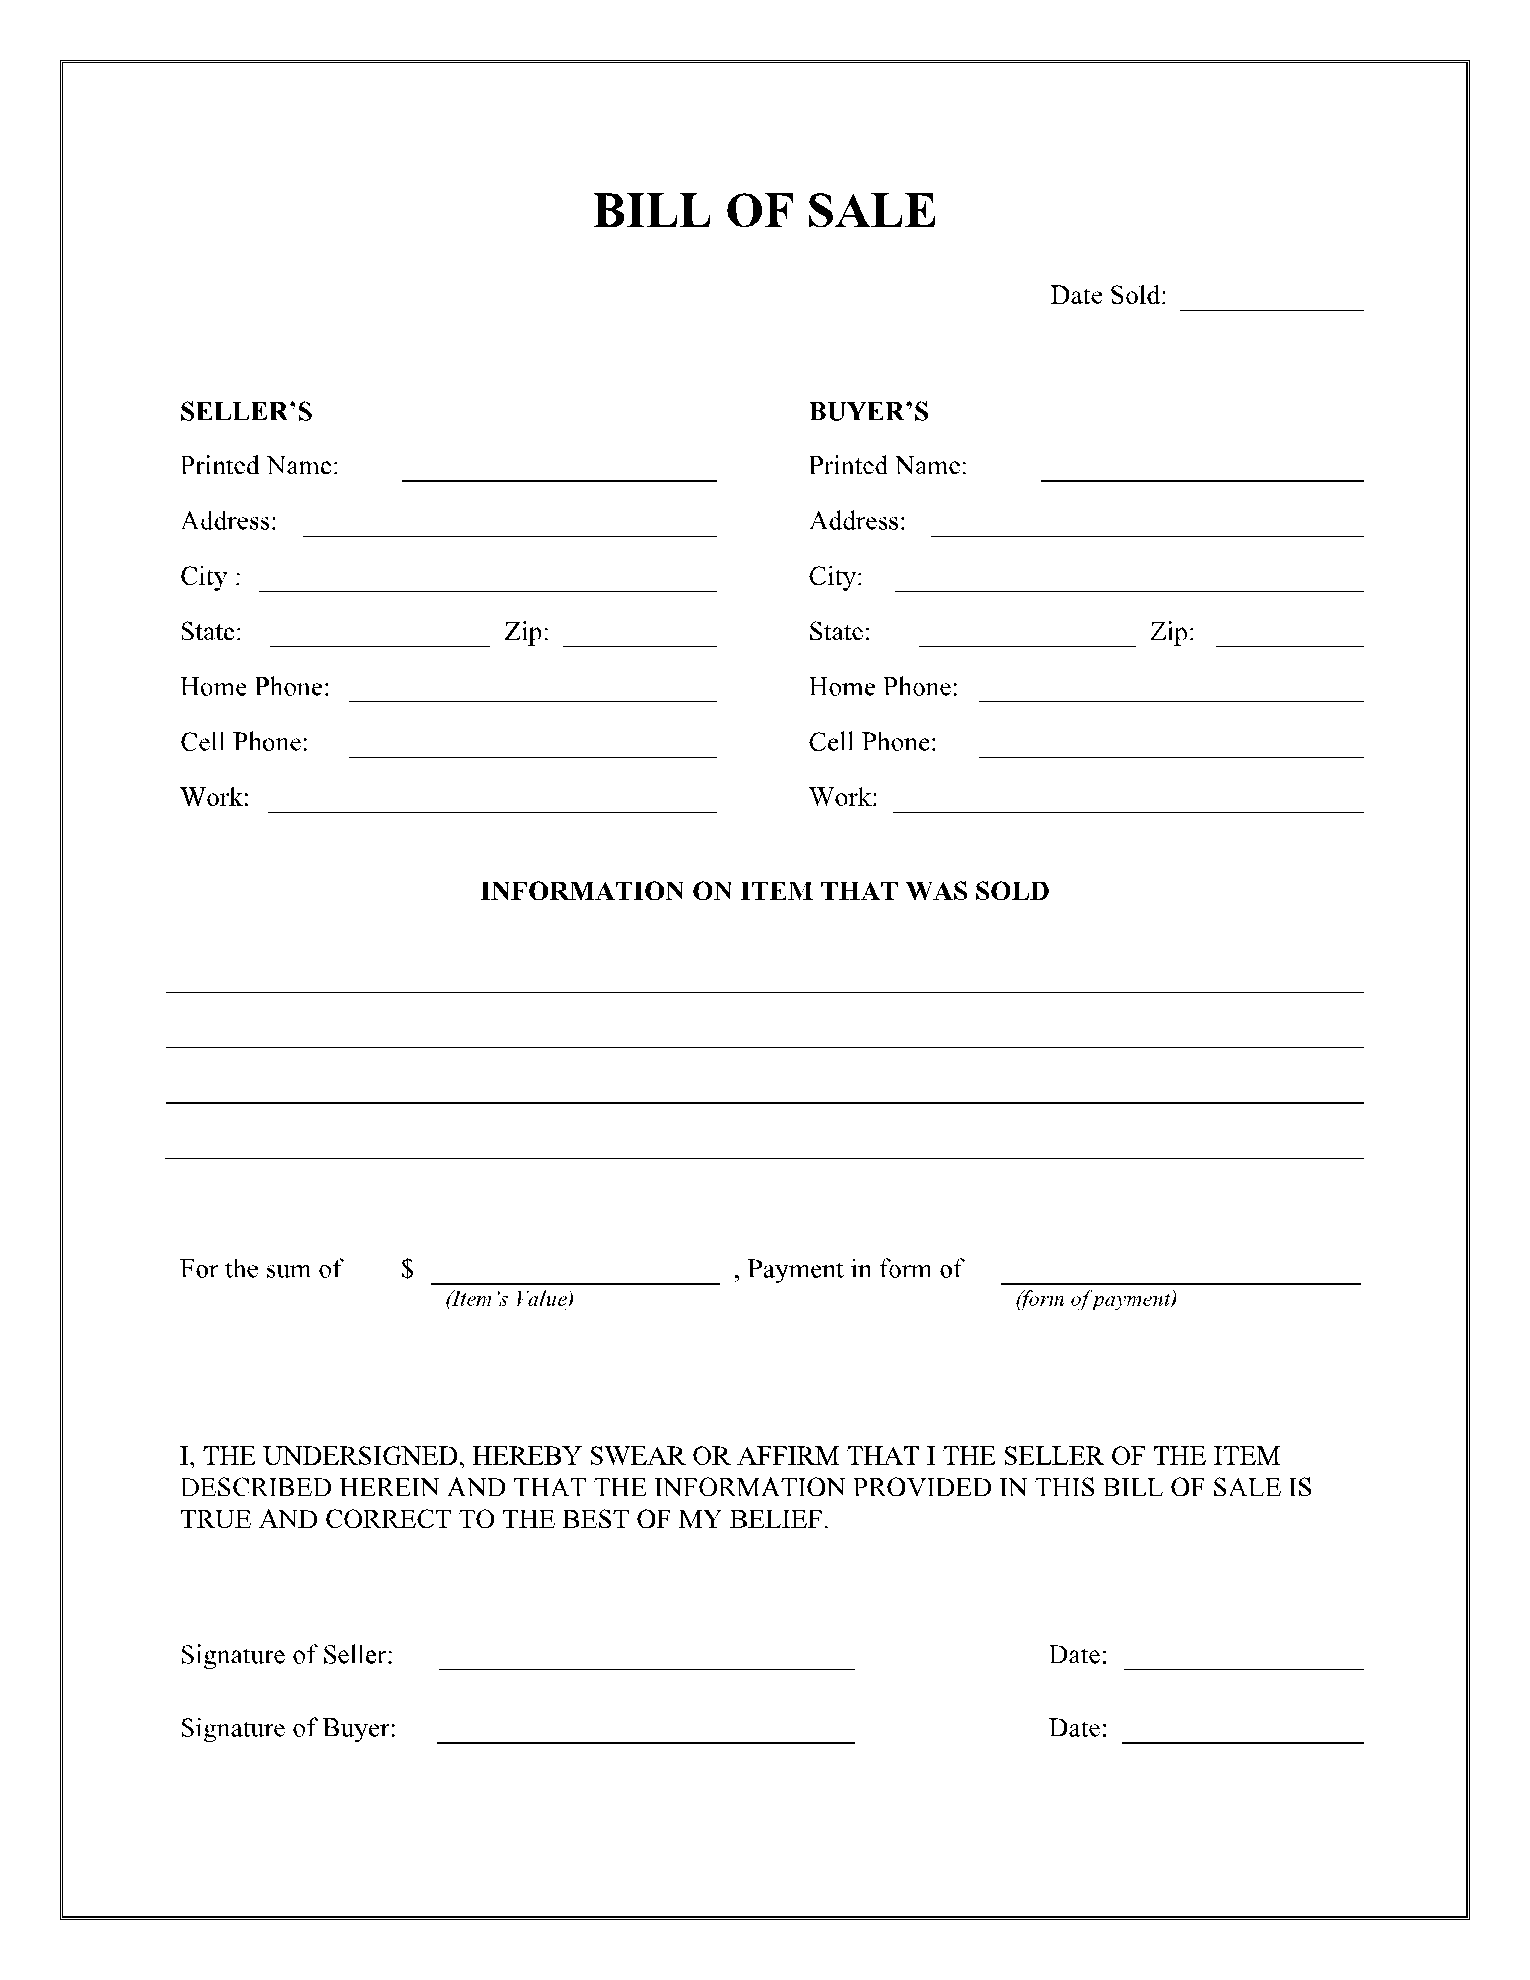 Printable General Bill Of Sale Template Word Printable Form